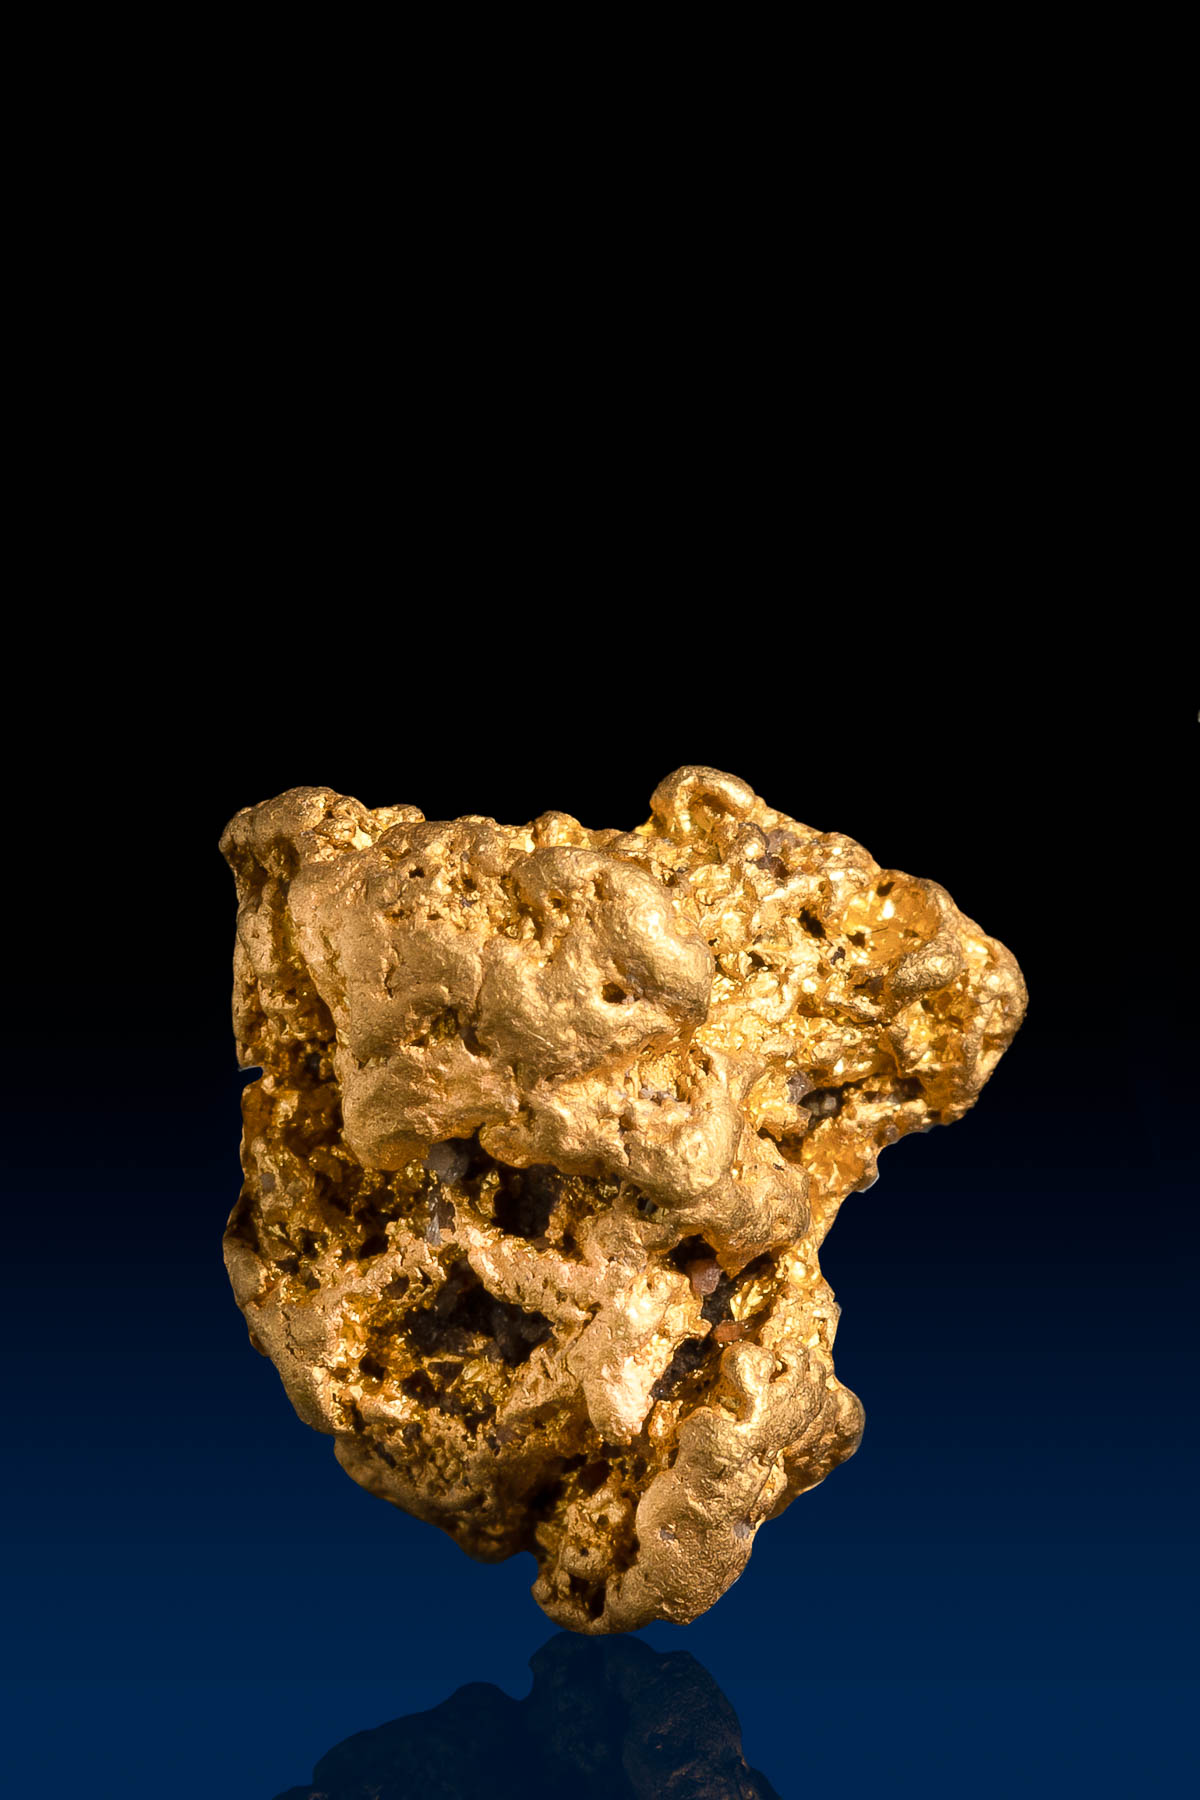 Square of Arizona Natural Gold Nugget - 3.39 grams